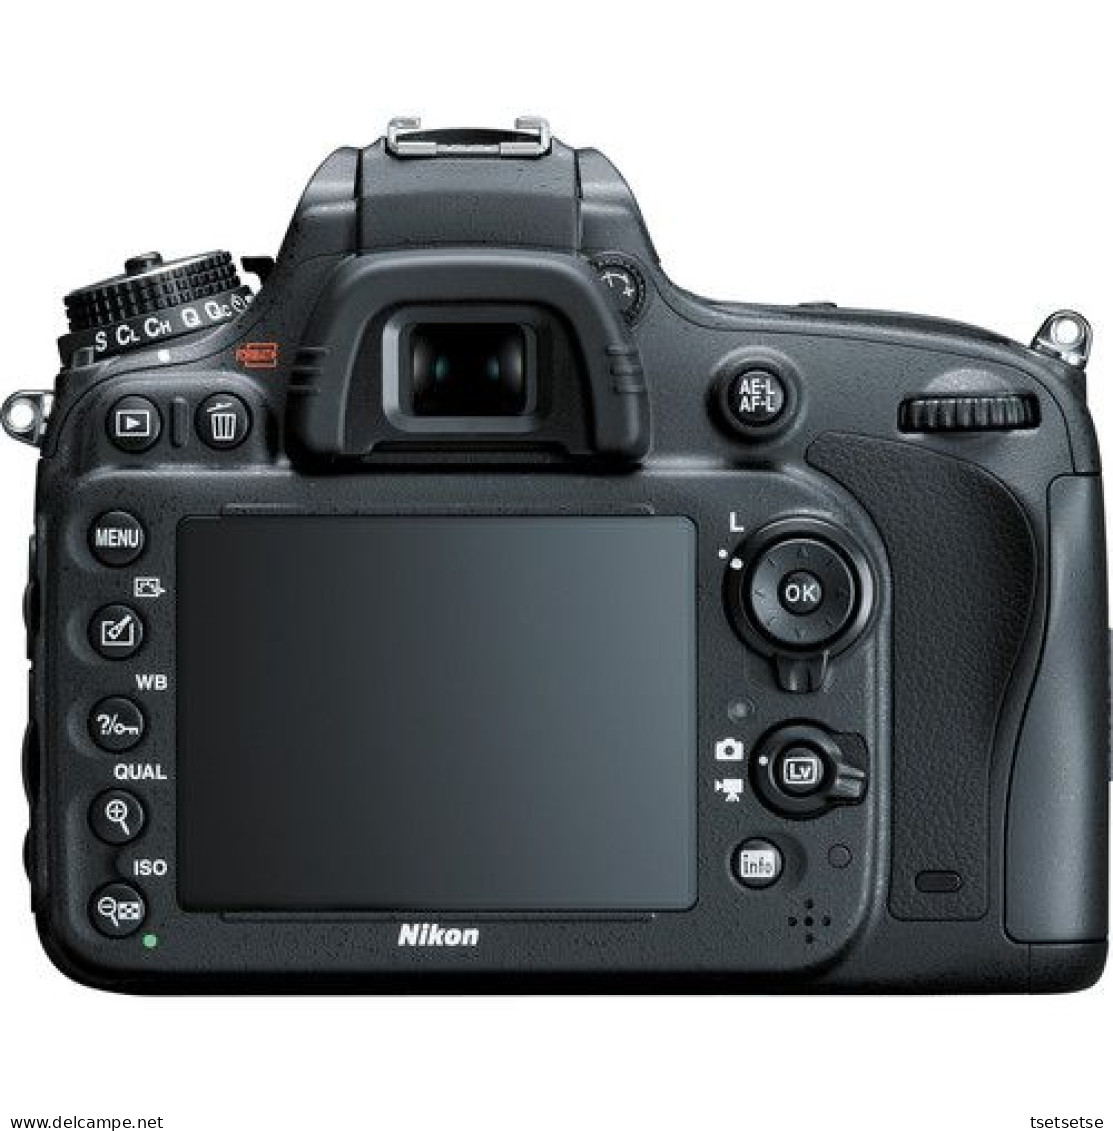 Your Choice $2,032 Or $1,099? "Brand NEW" Nikon Full-frame FX D610 DSLR Camera Kit - Macchine Fotografiche